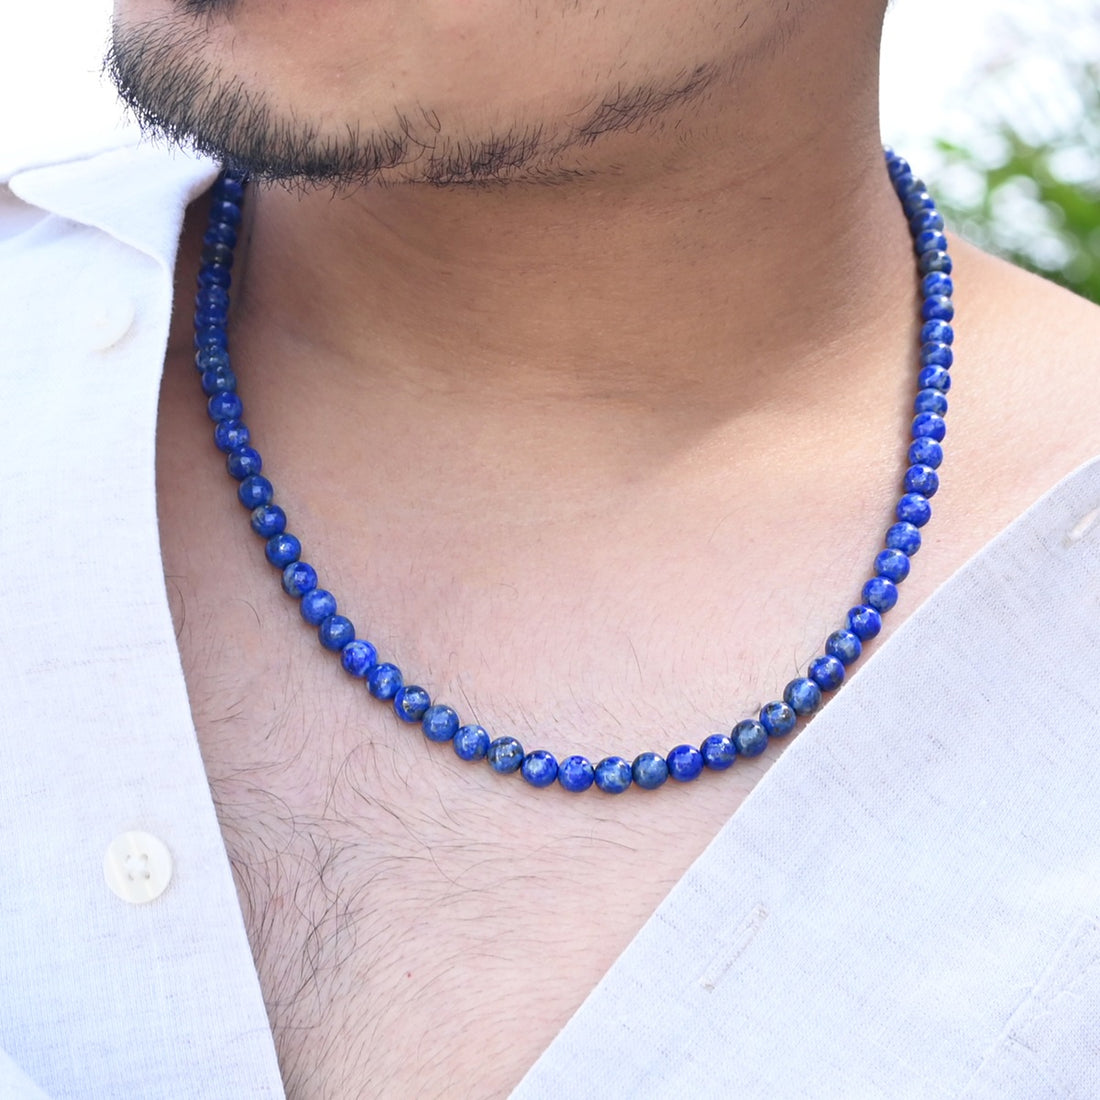 Men's Lapis Lazuli Gemstone Silver Necklace: Smooth round beads with silver lock